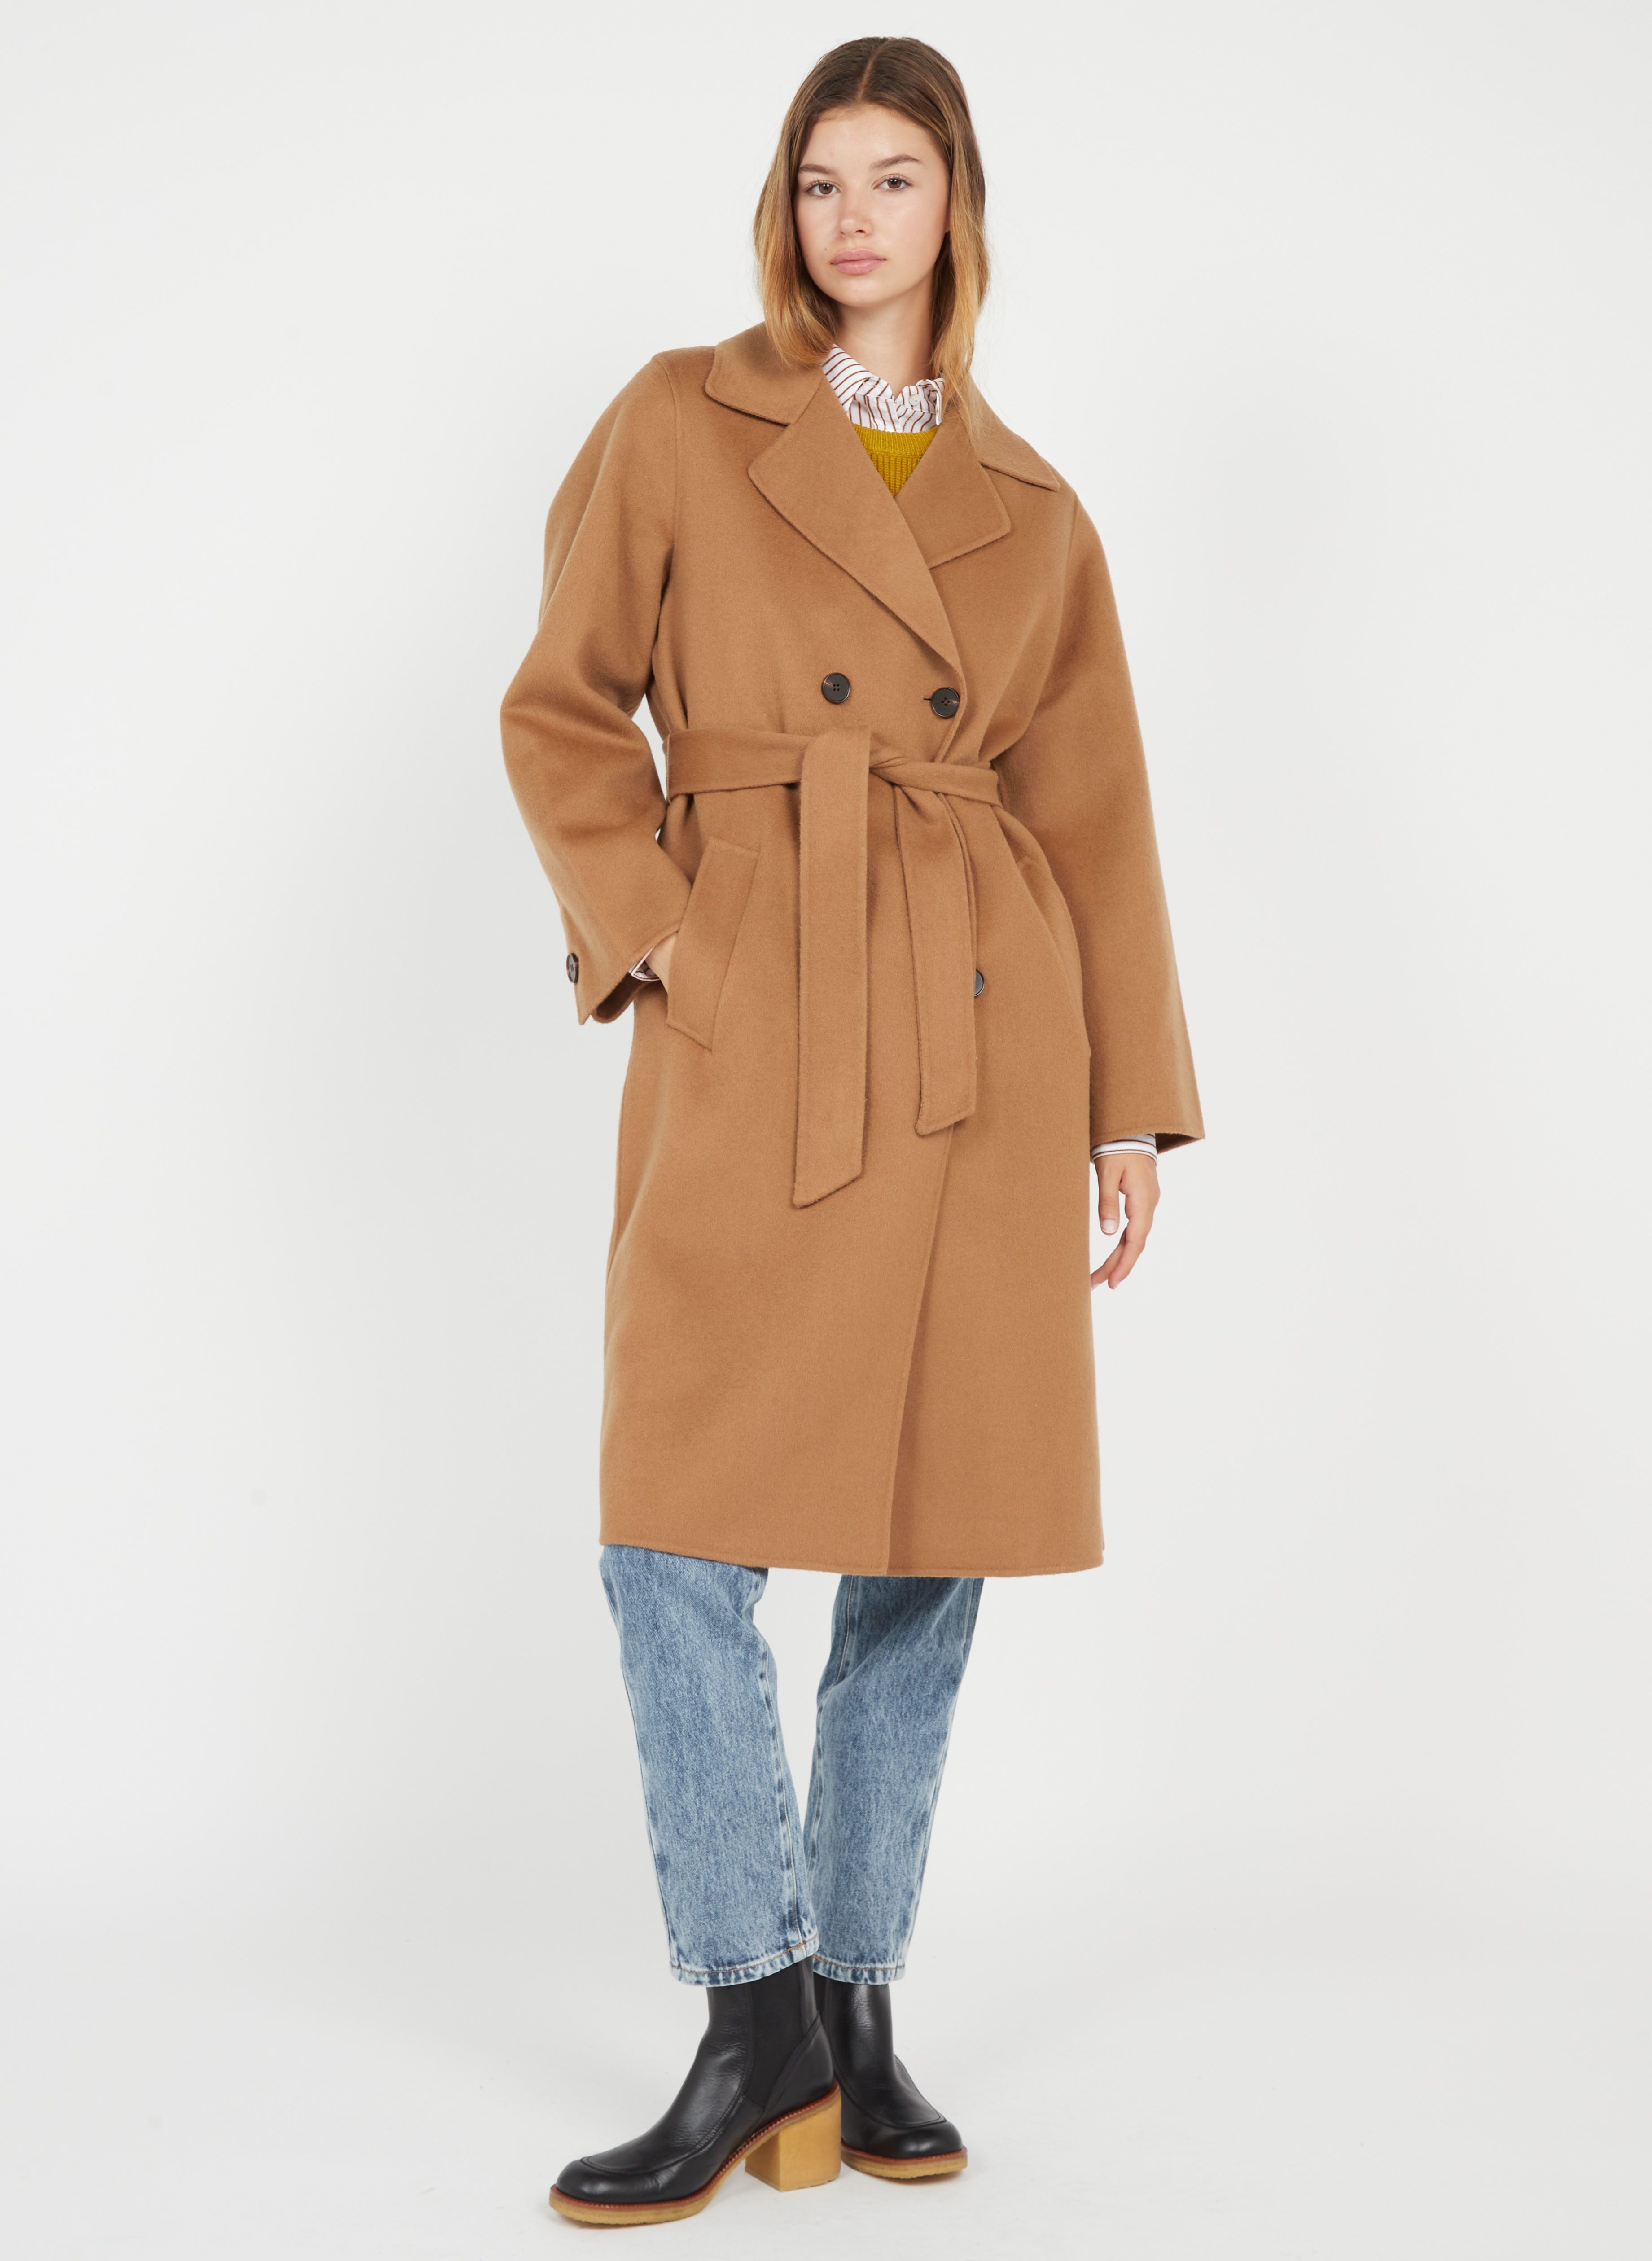 discount 79% WOMEN FASHION Coats Long coat Elegant Adelaide Magalhaes Long coat Black L 